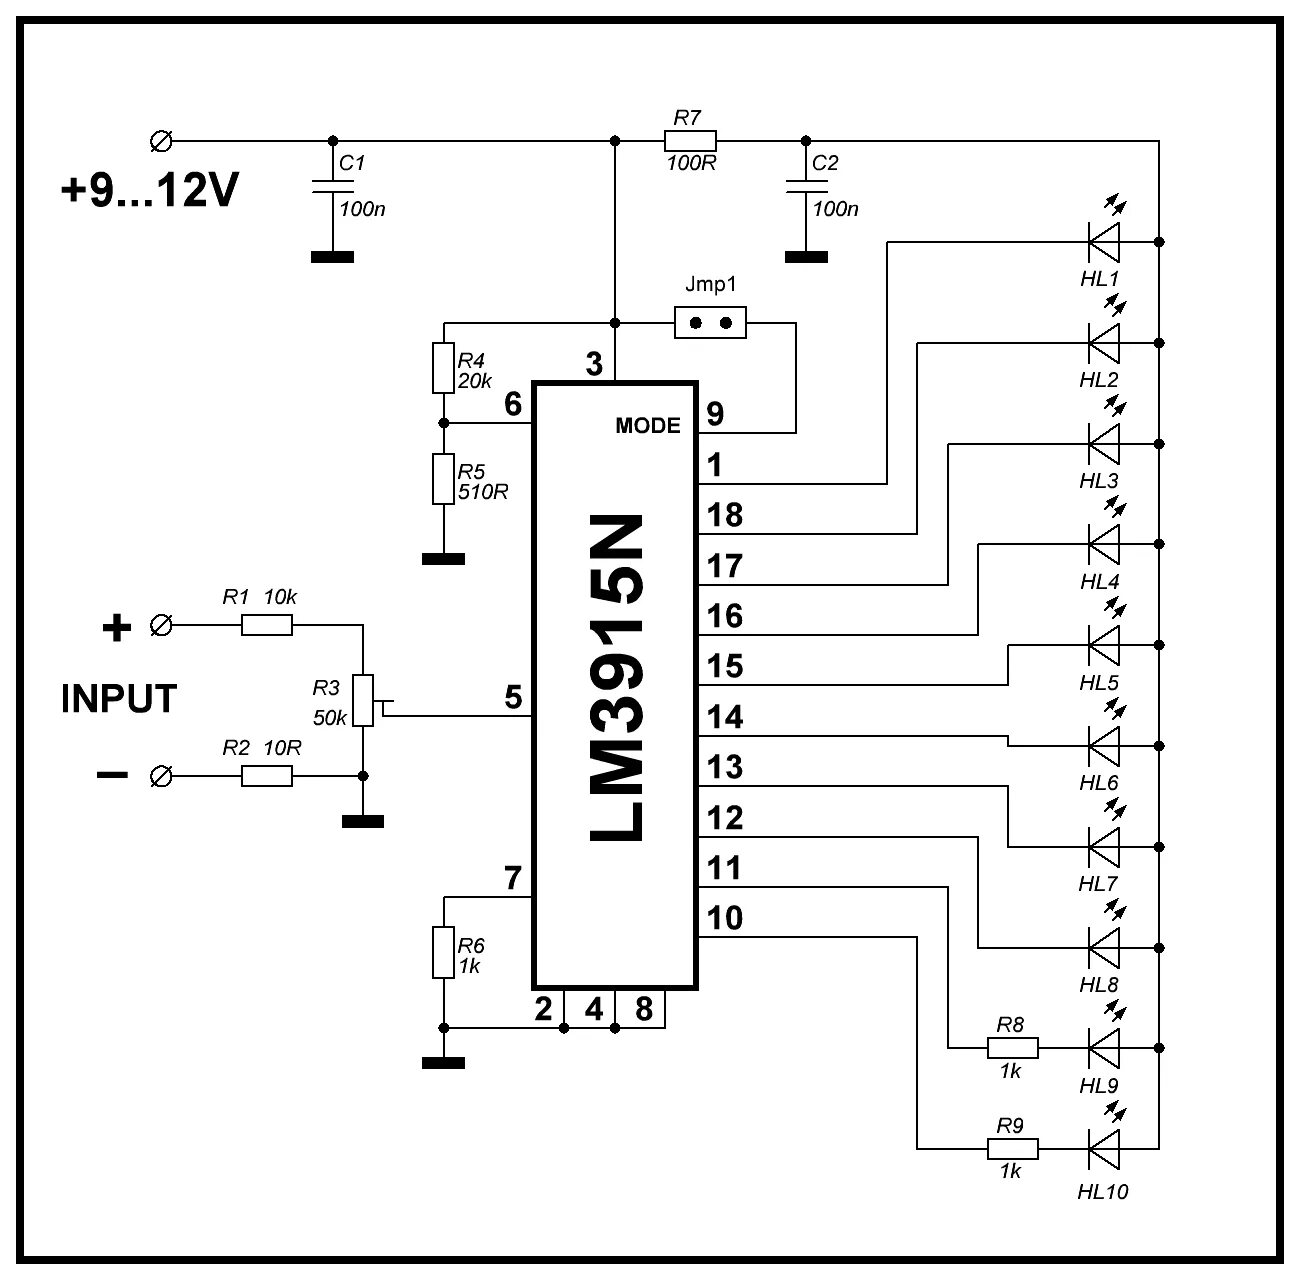 Lm3915 индикатор уровня. Lm3915 индикатор уровня сигнала схема. Lm3915 схема включения. Индикатор уровня на lm3915 схема. Светодиодный индикатор уровня сигнала на lm3915 схема.